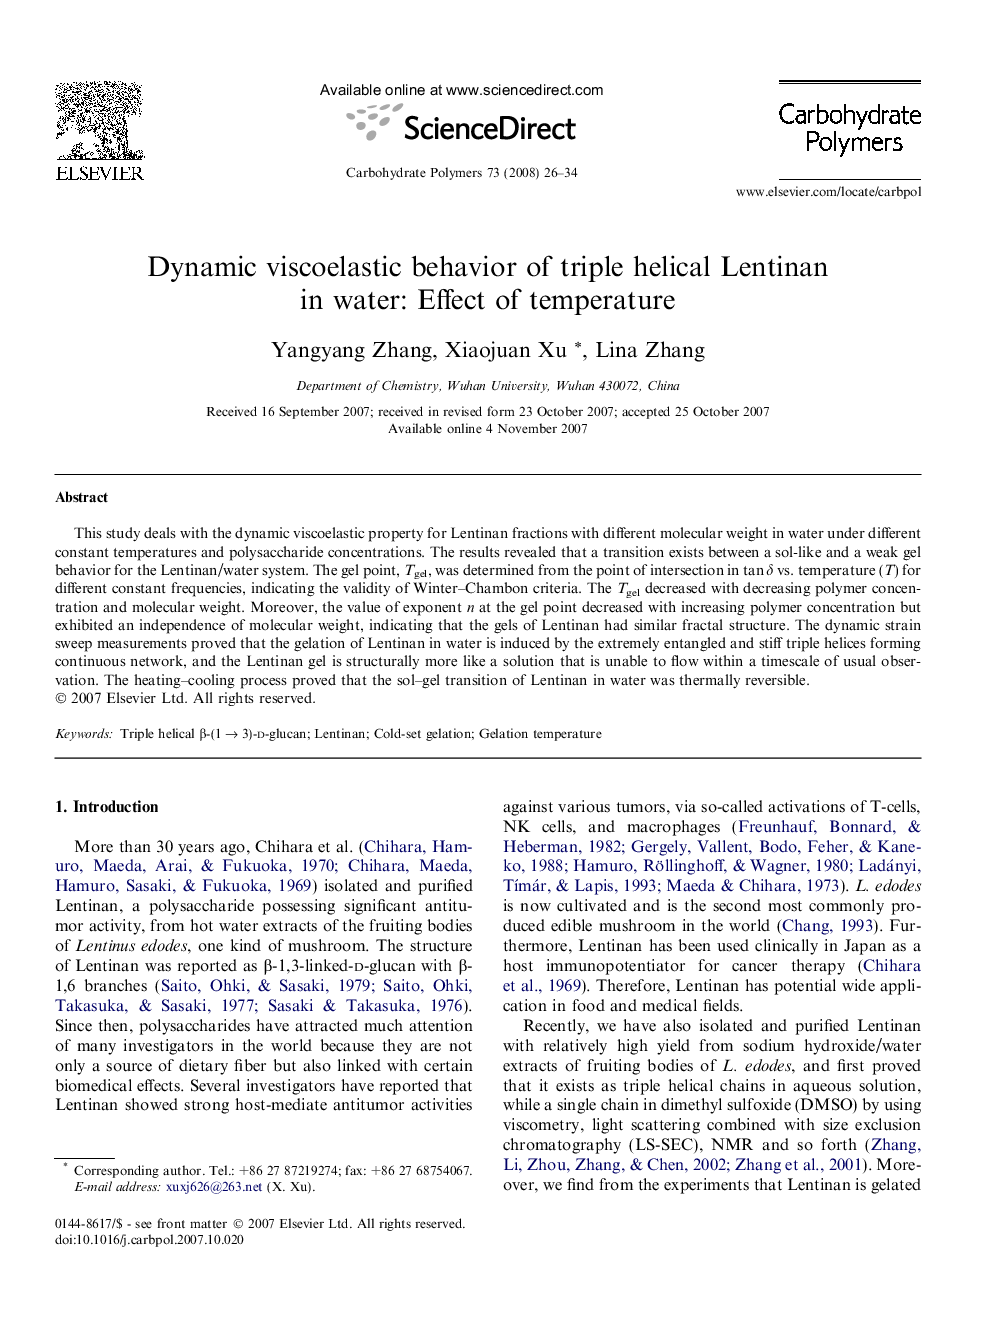 Dynamic viscoelastic behavior of triple helical Lentinan in water: Effect of temperature